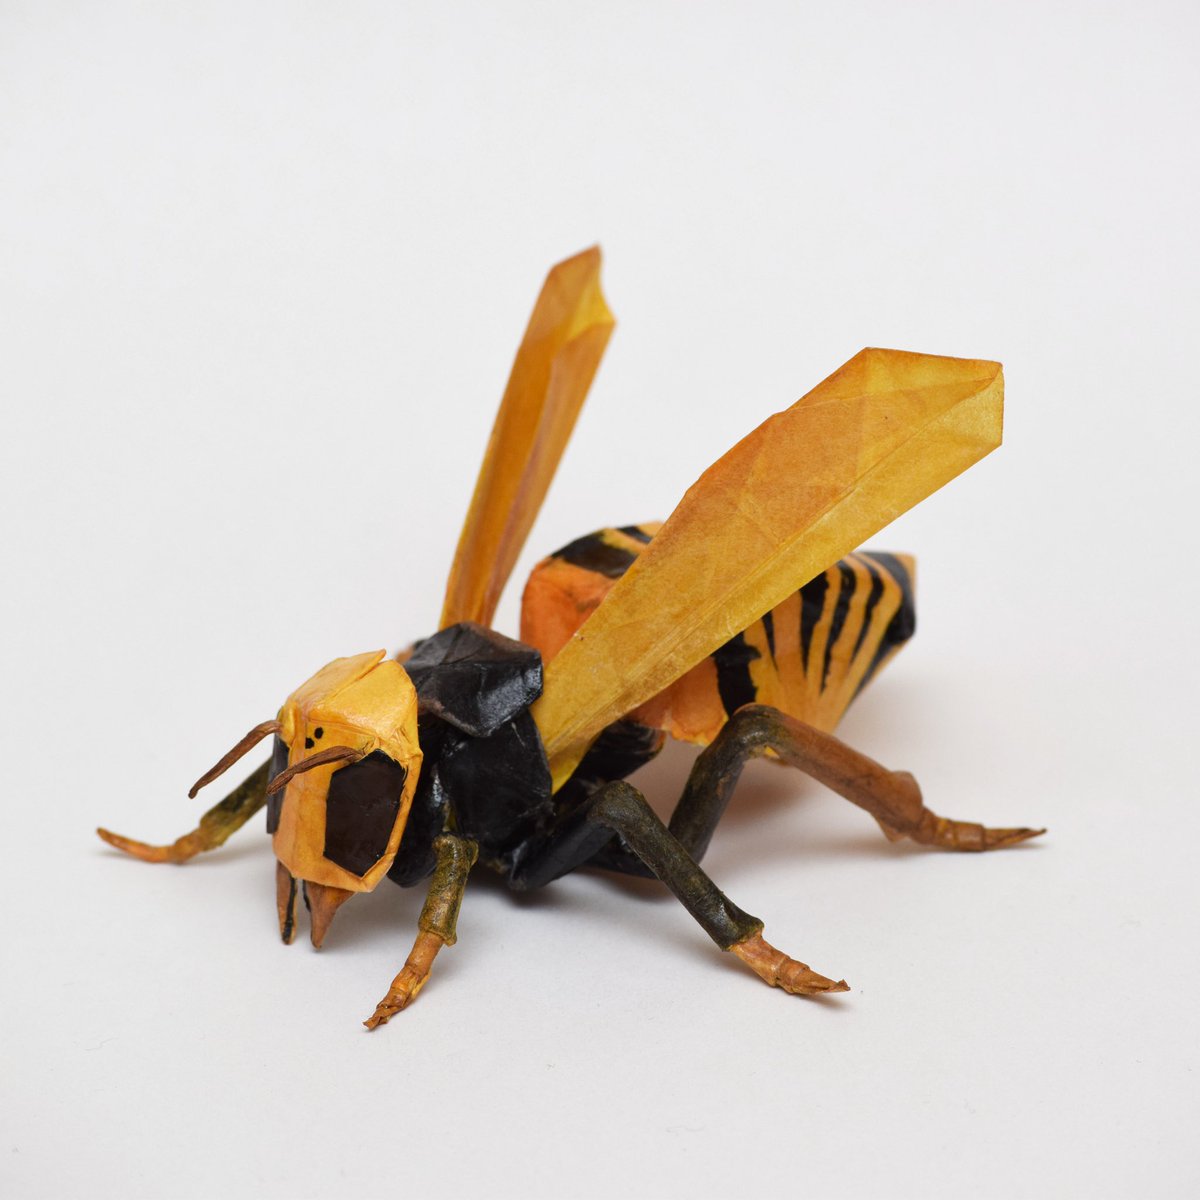 Twitter 上的 Kal スズメバチ Wasp 不切正方形一枚折り 折り上げた後に塗装とコーティングをしています 翅に蝋引き加工を施してみました 初めての昆虫創作 折り紙 折り紙作品 Origami T Co Crtqs7anfl Twitter